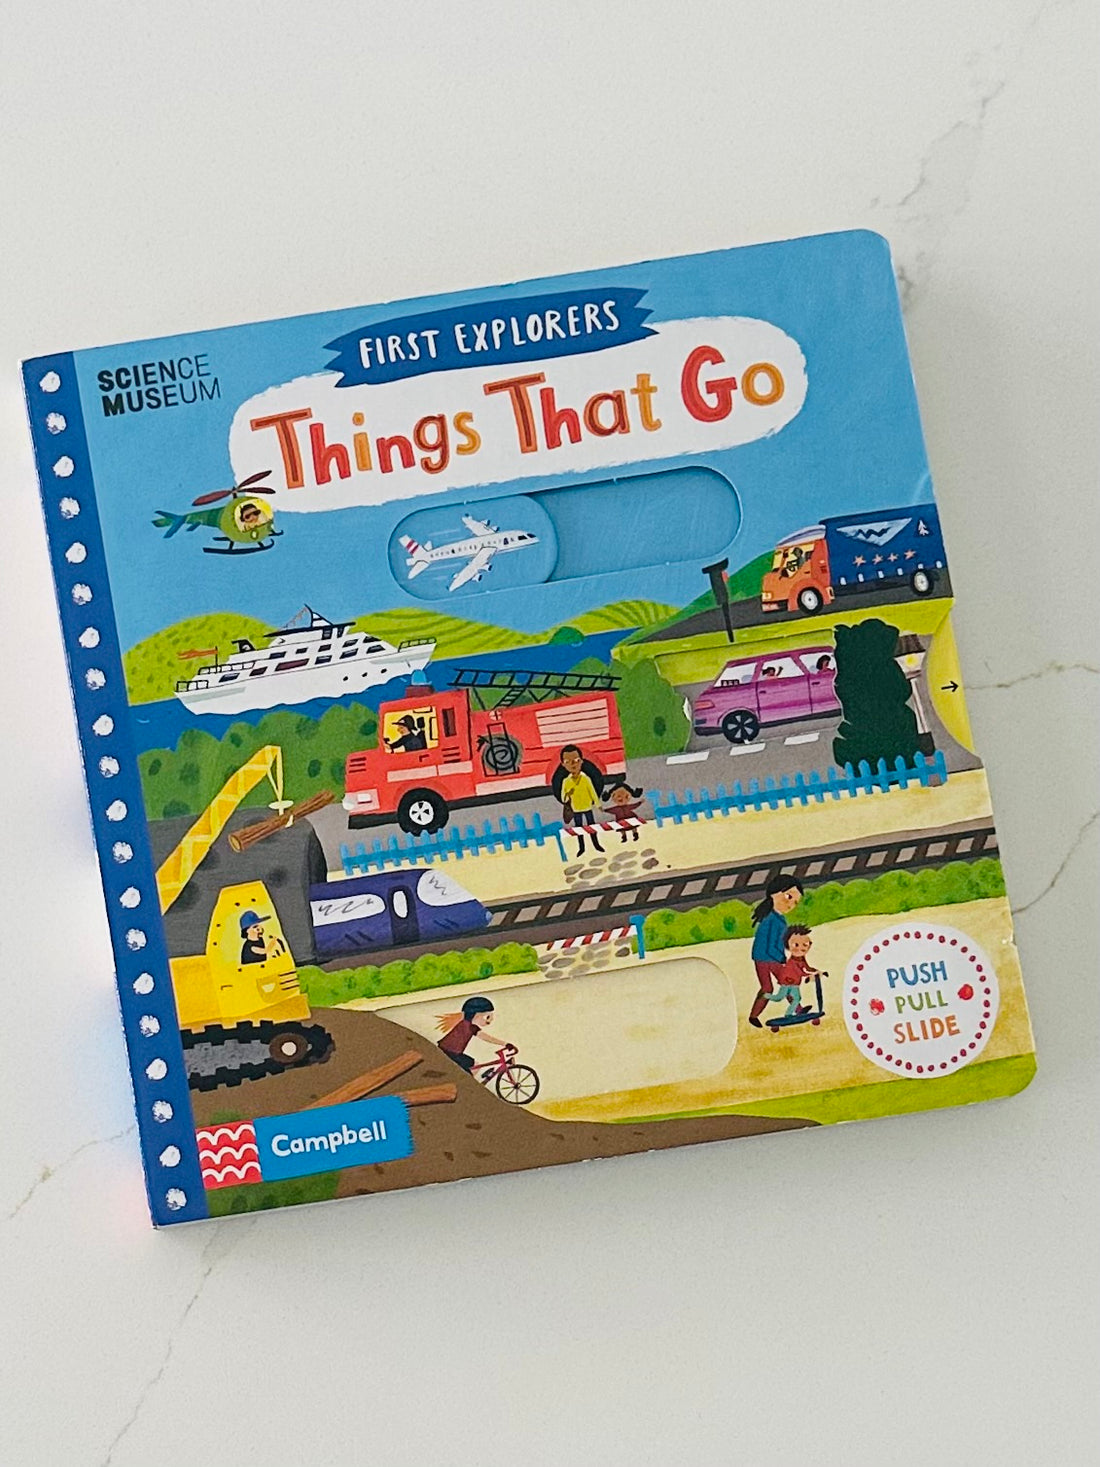 Things That Go: A Push, Pull, Slide bog af Christiane Engel